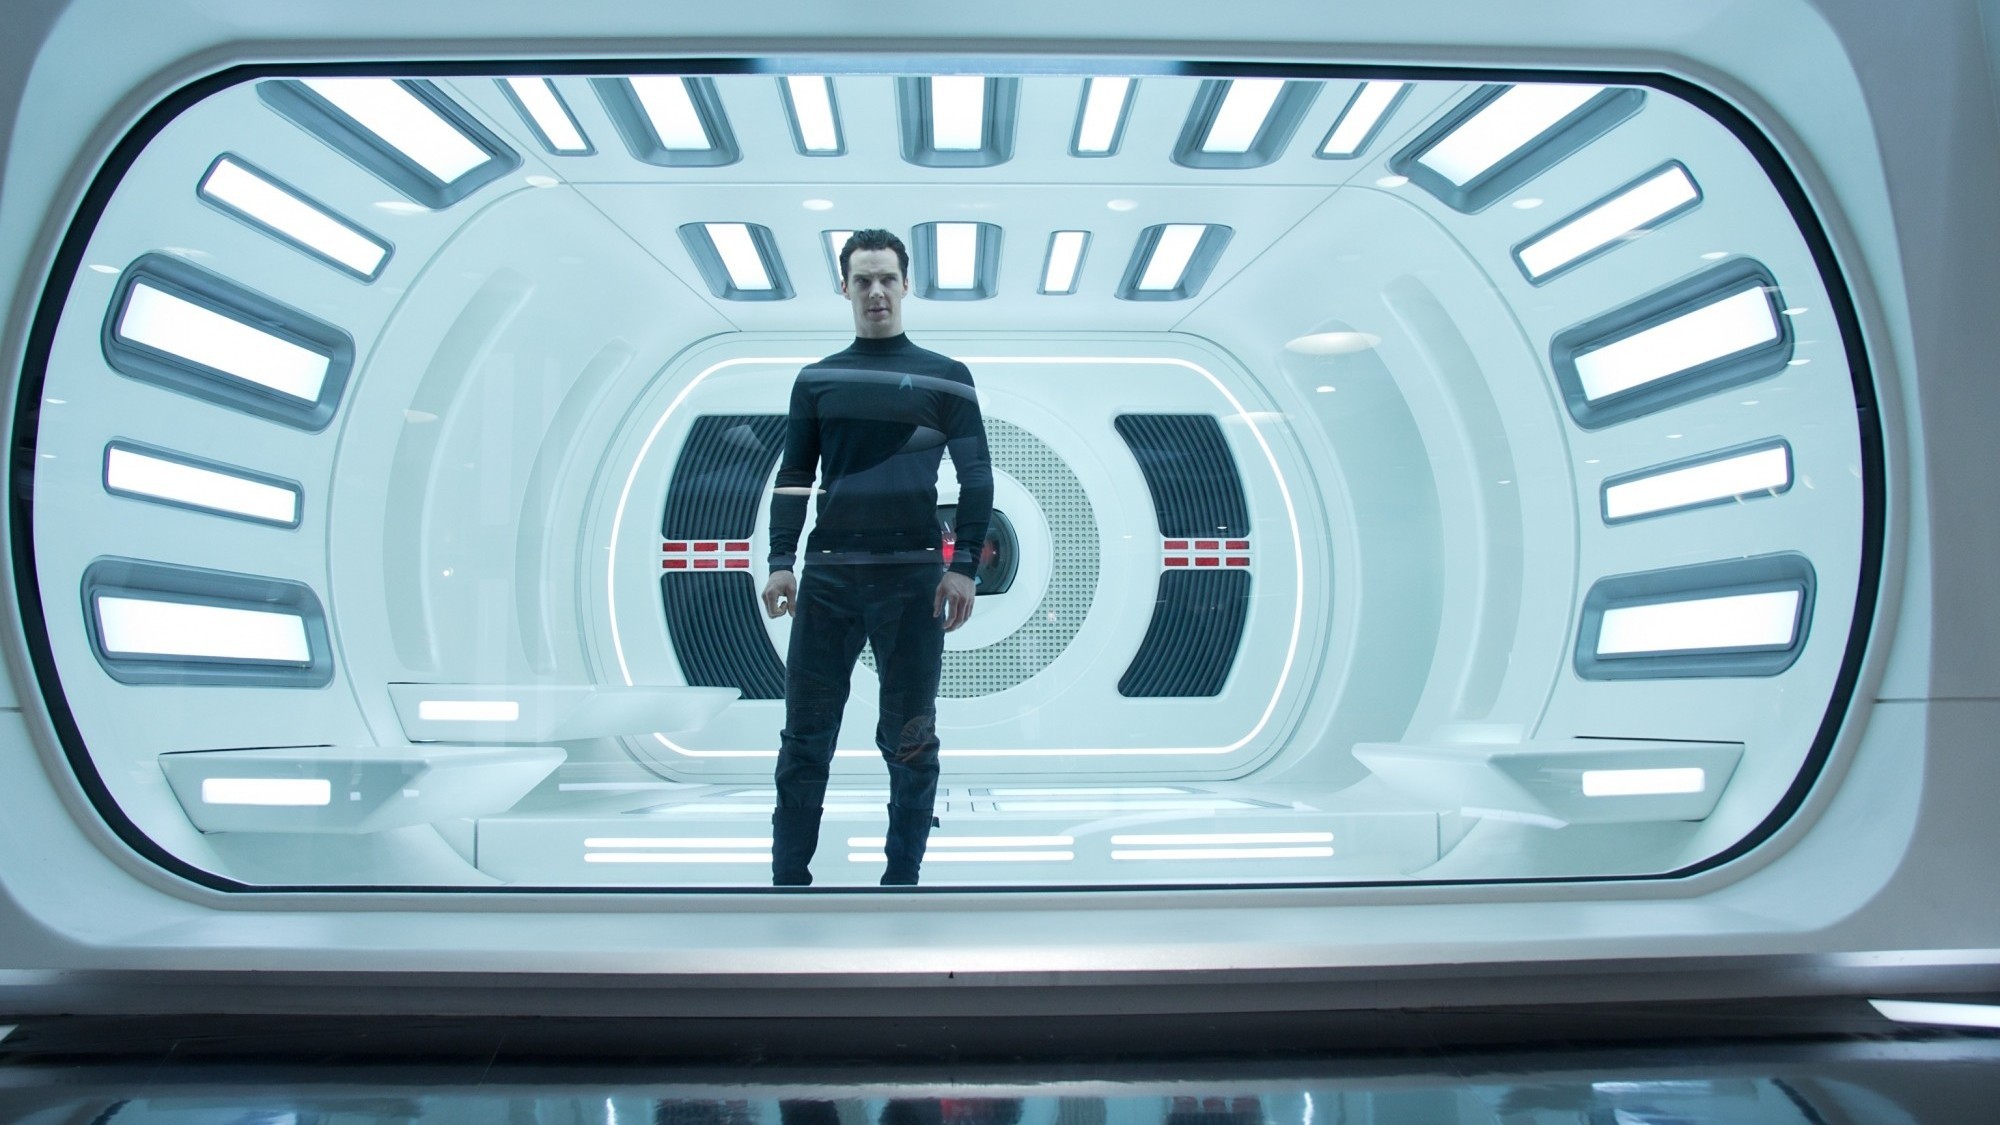 People 2000x1125 movies Star Trek Into Darkness Benedict Cumberbatch Khan villains science fiction men